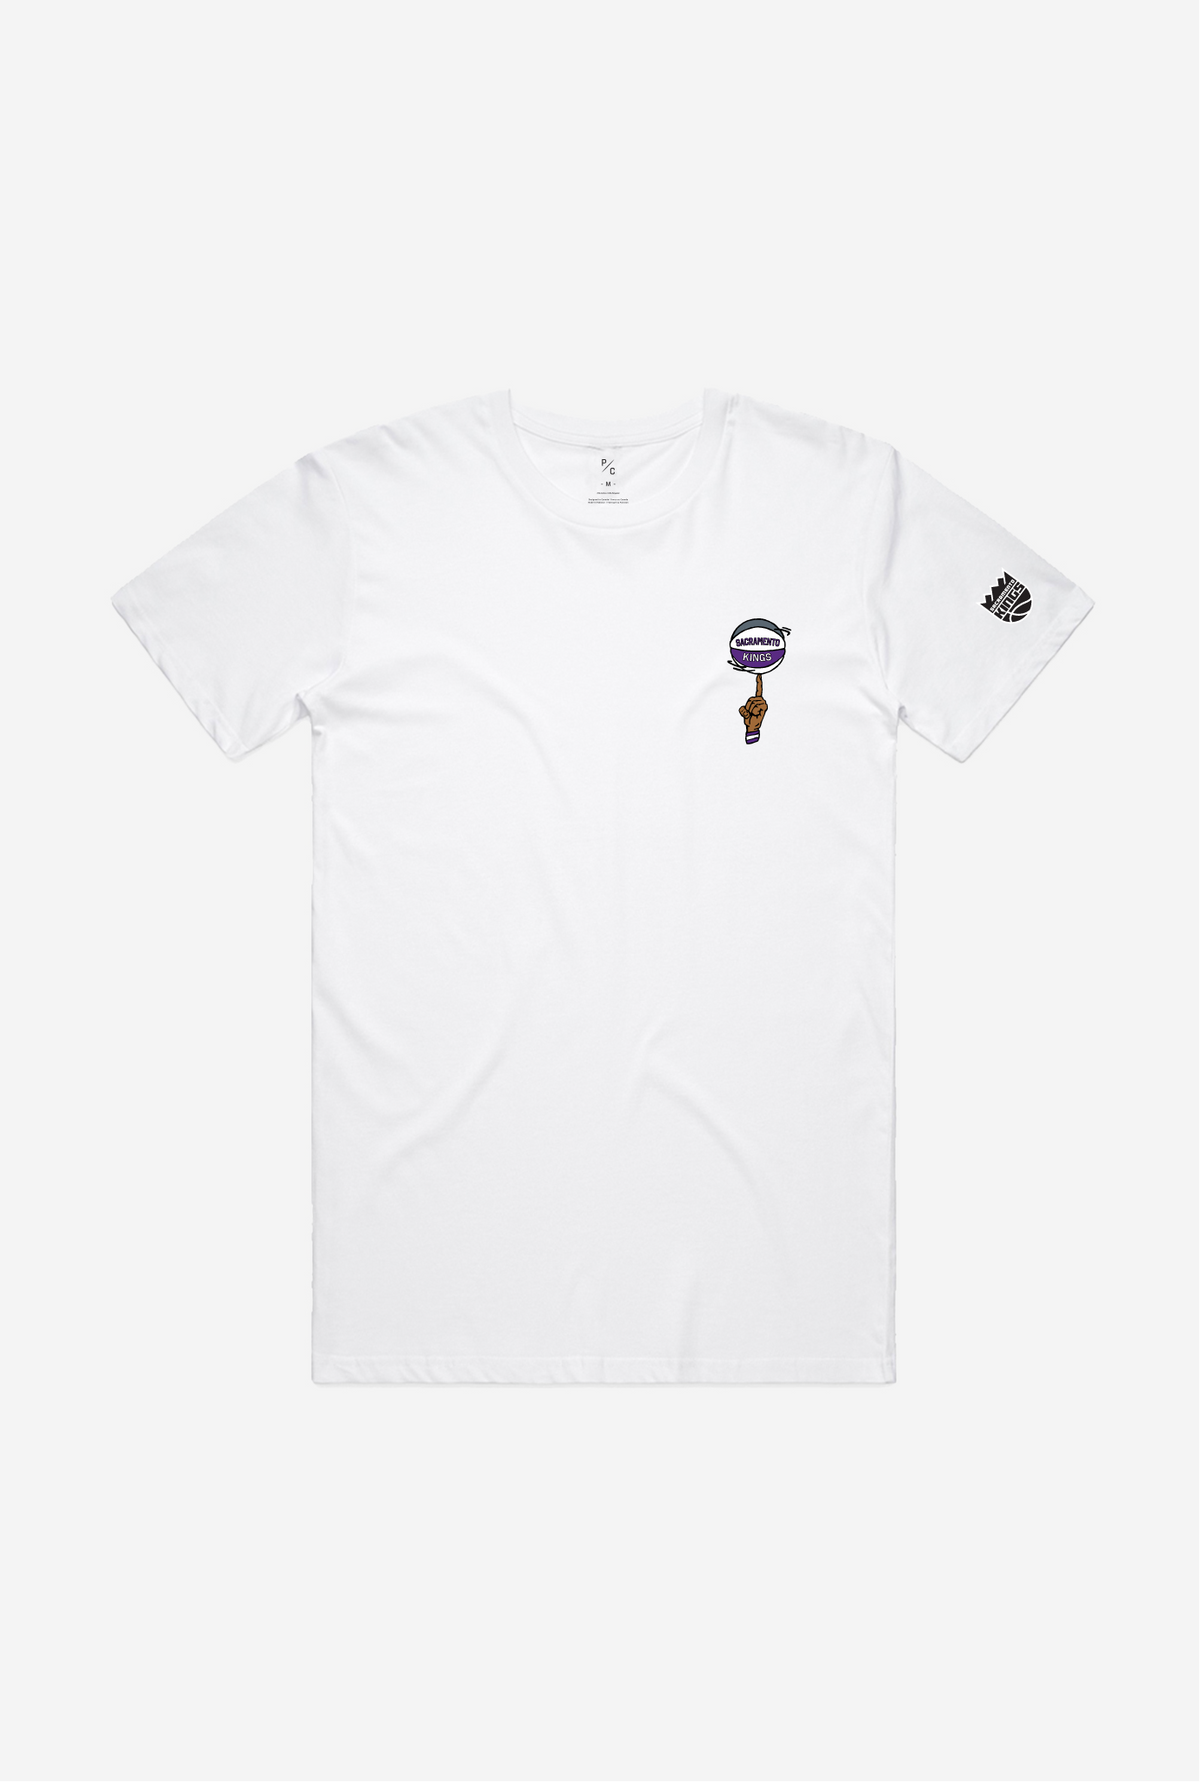 Sacramento Kings Spinning Ball T-Shirt - White